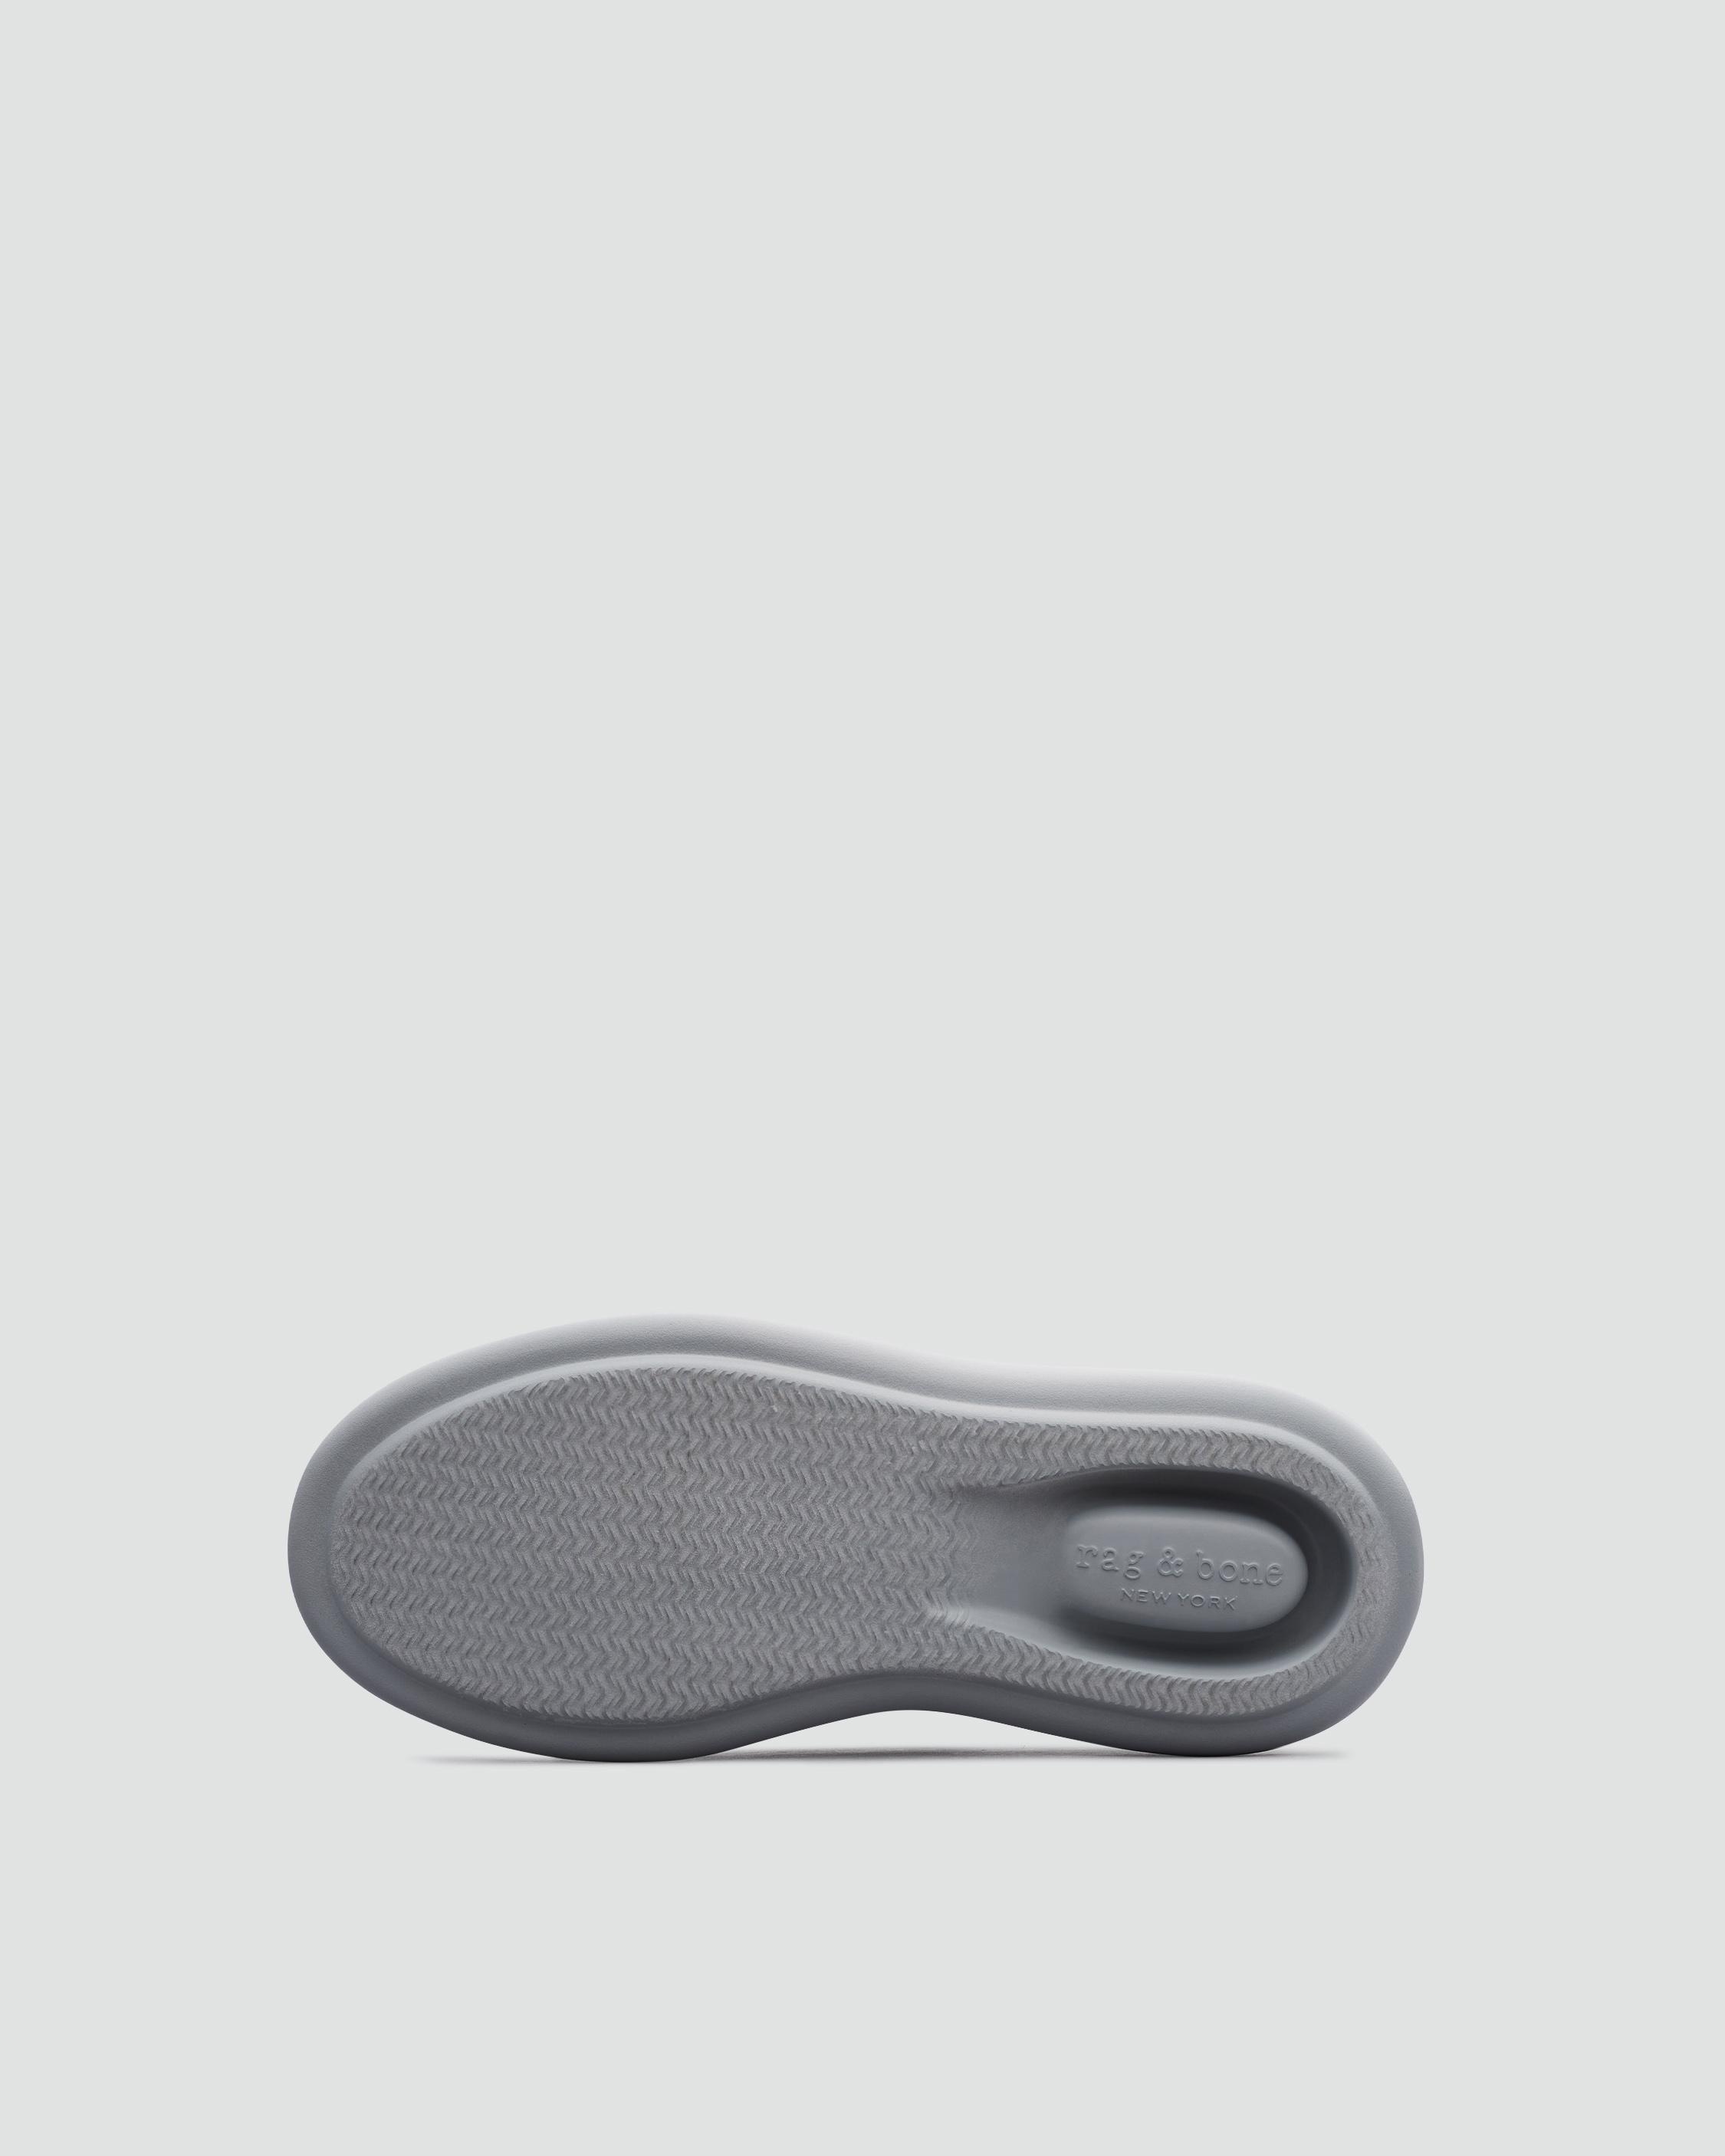 Brixley Sandal - Knit
Platform Sandal - 5